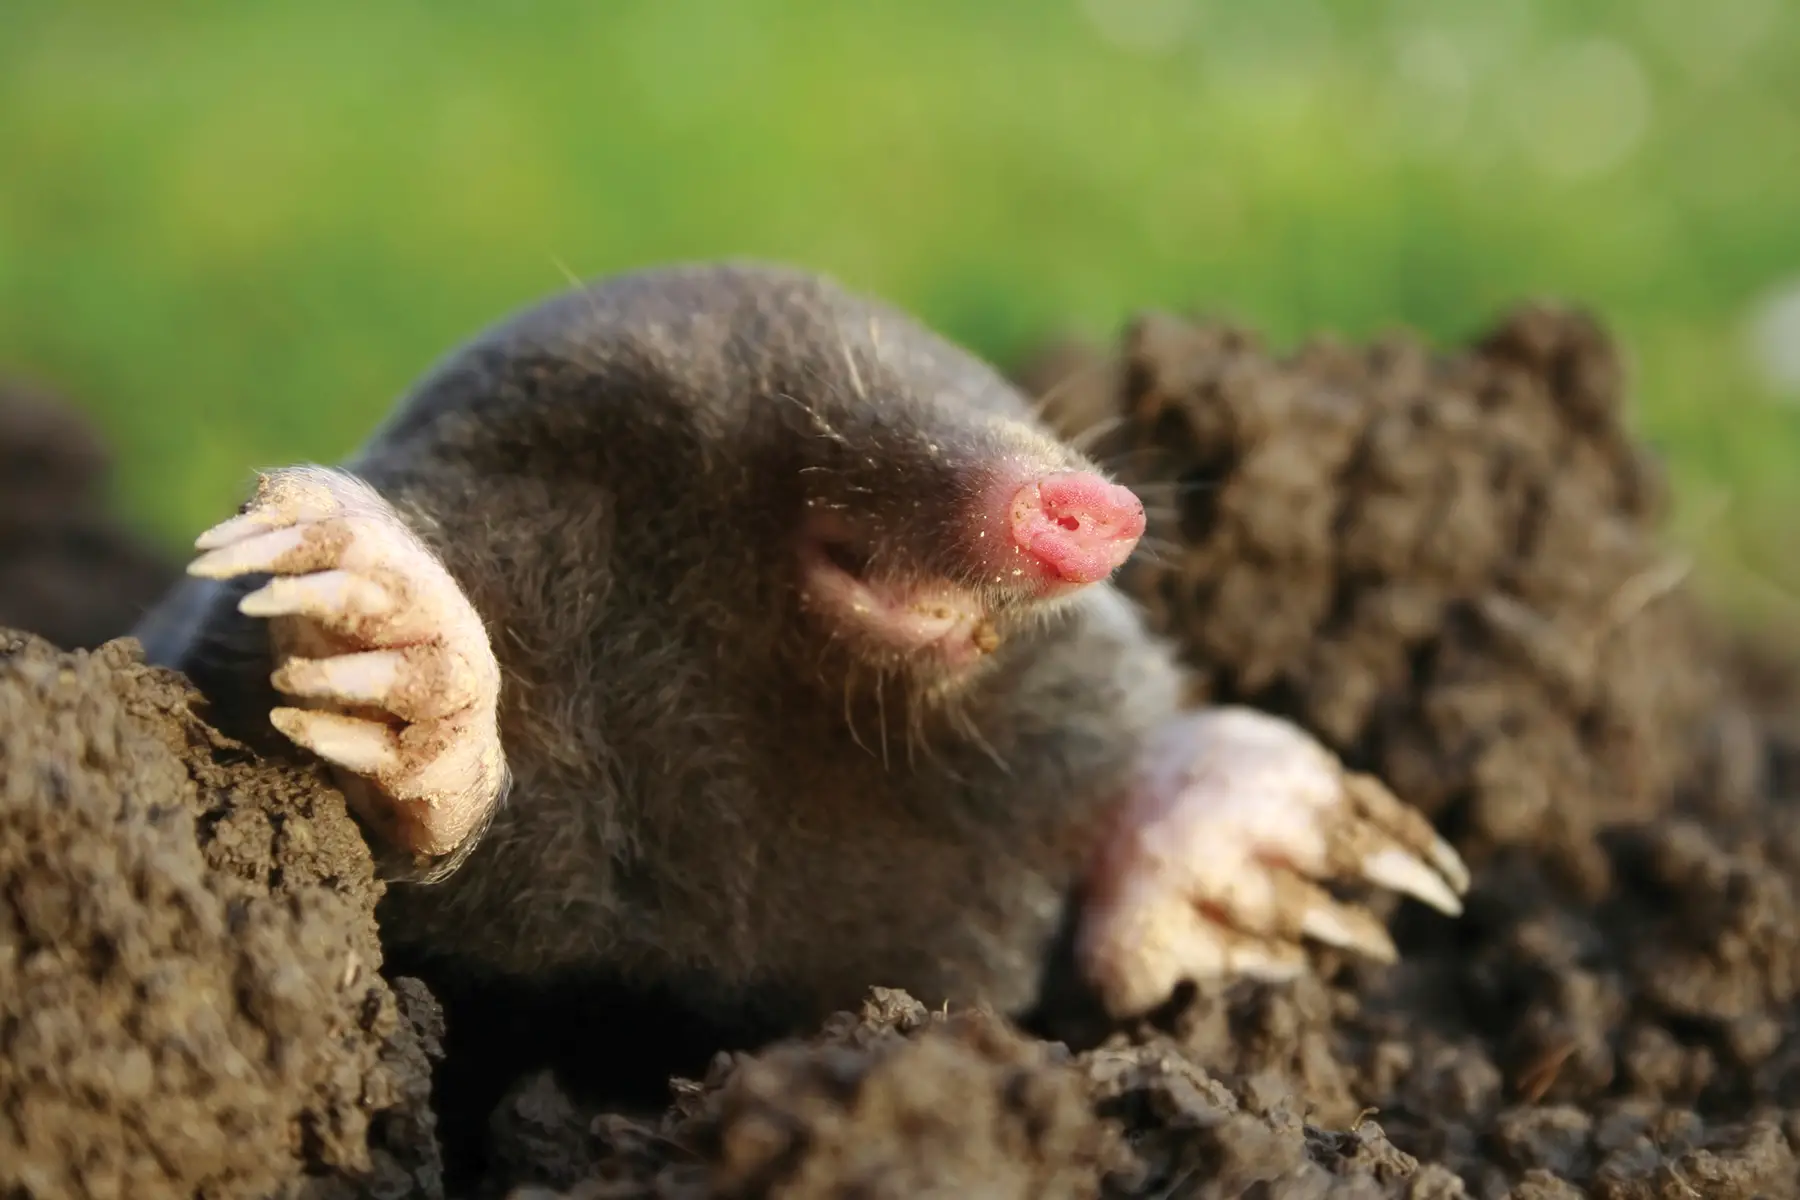 Do Moles And Mice Coexist?